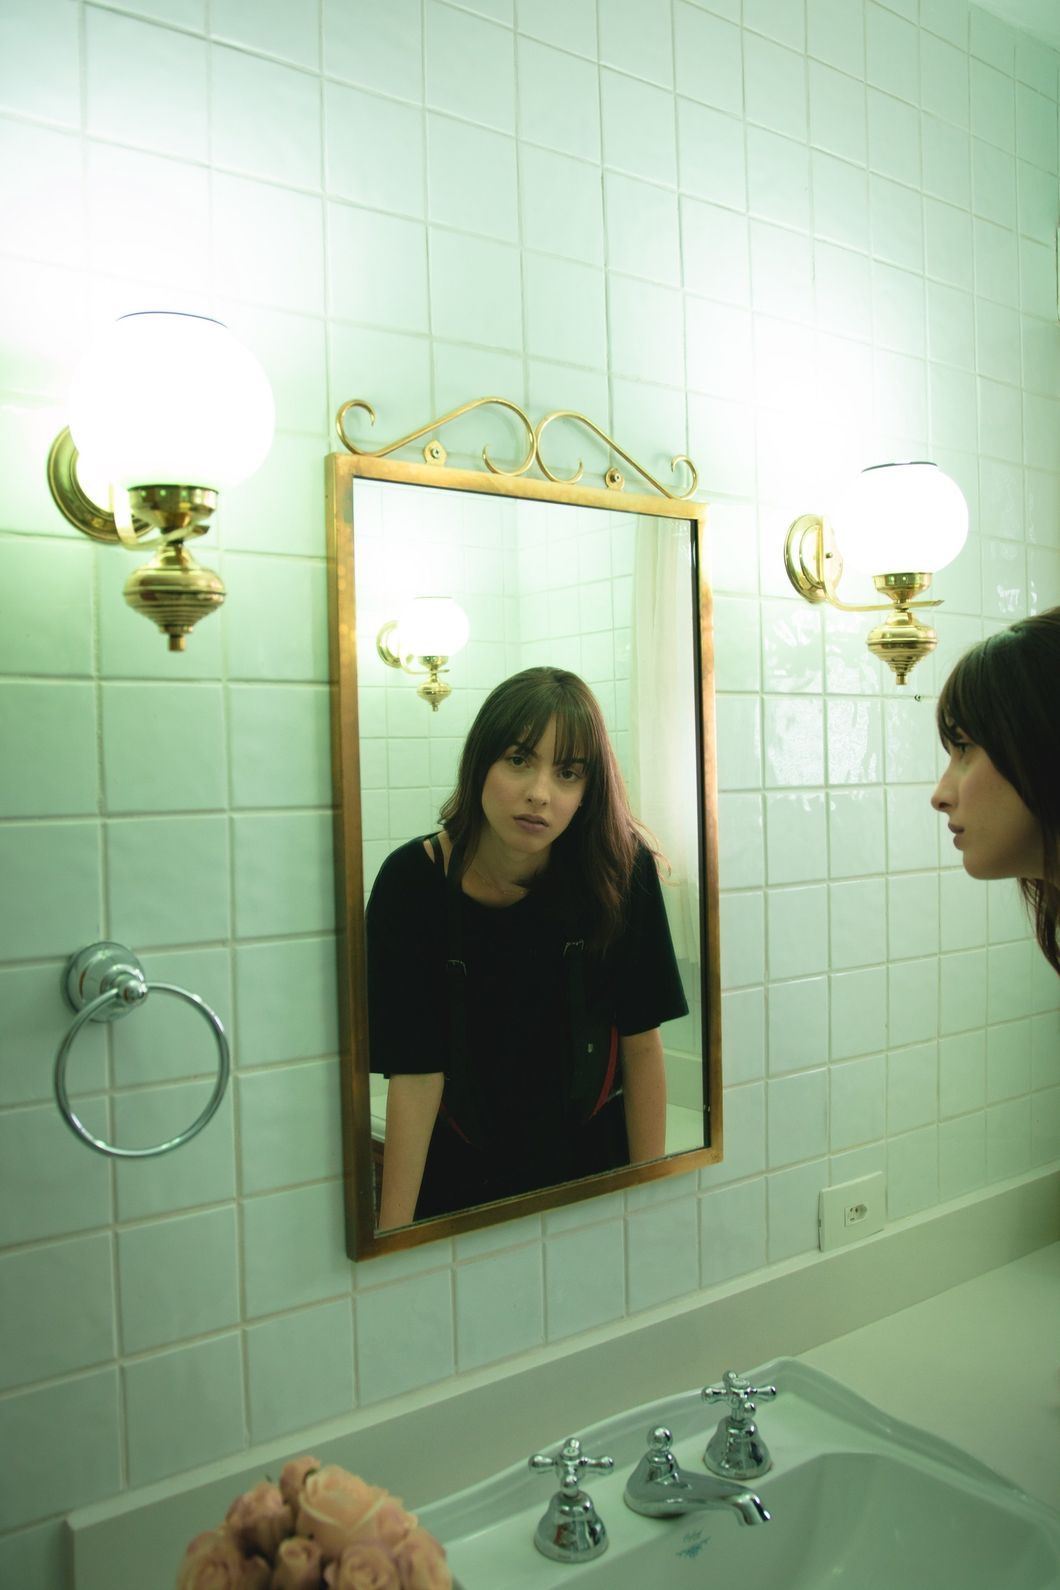 https://www.pexels.com/photo/woman-in-black-t-shirt-staring-on-wall-mirror-2043599/